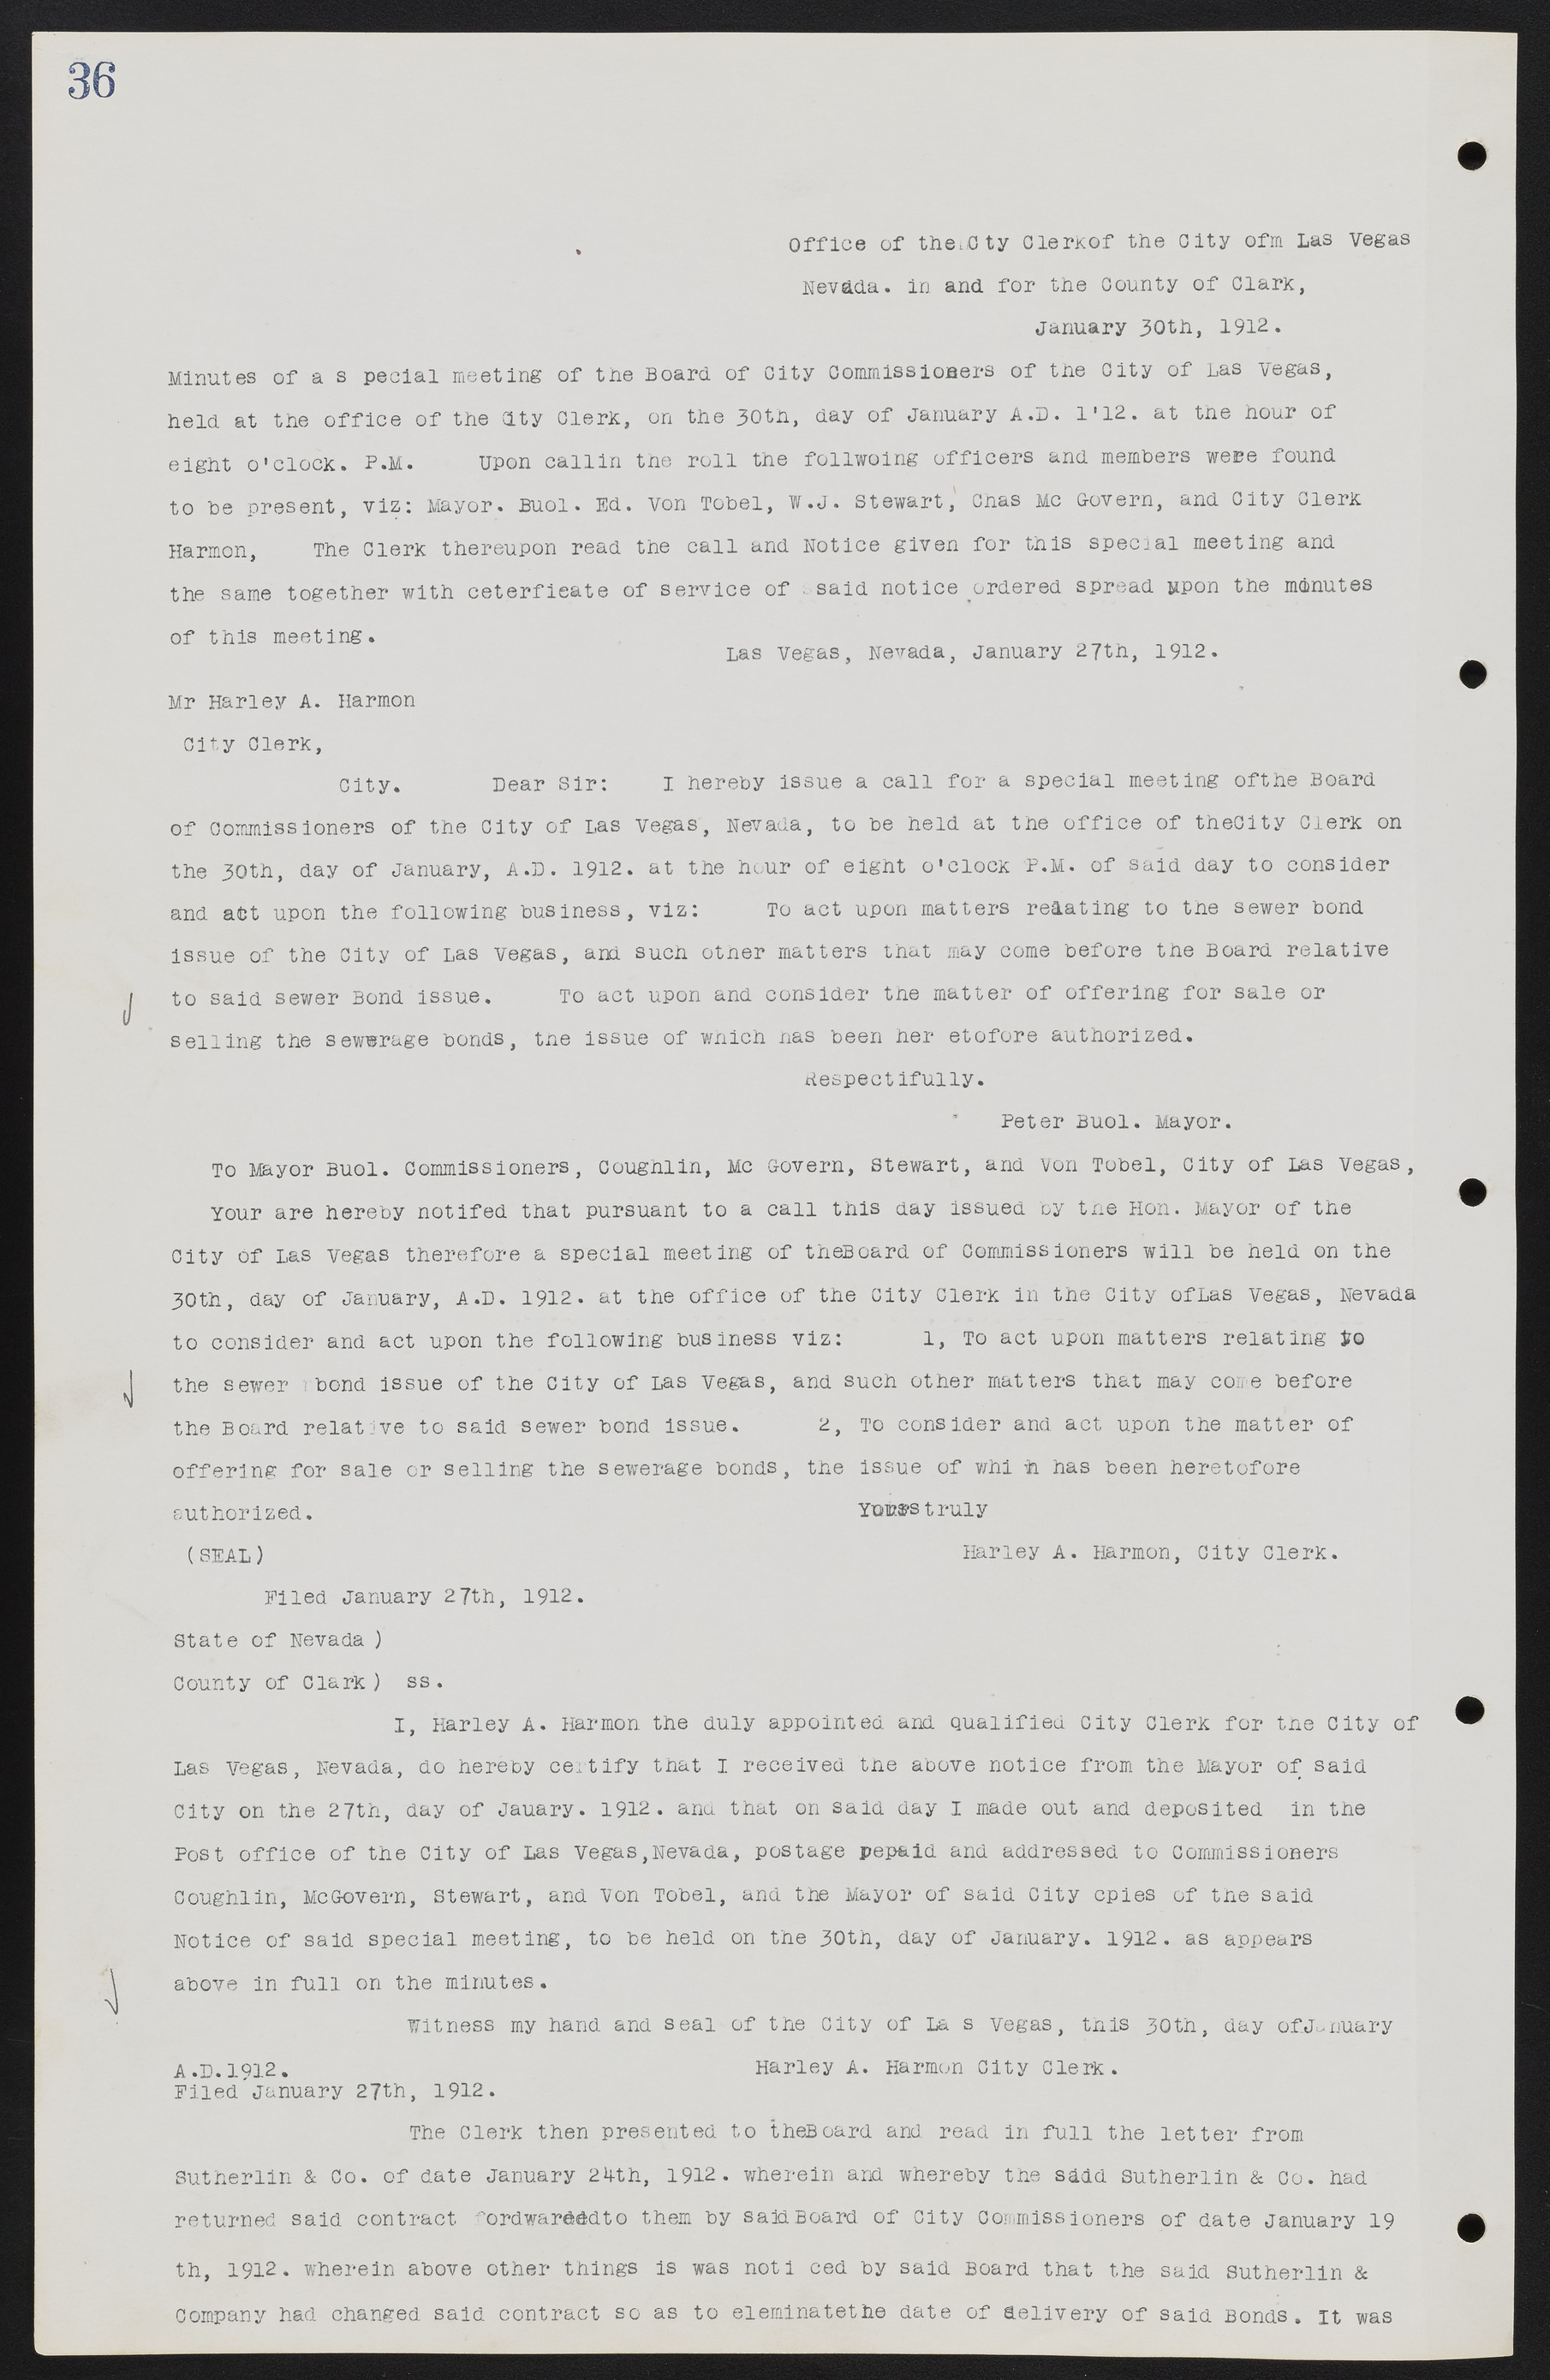 Las Vegas City Commission Minutes, June 22, 1911 to February 7, 1922, lvc000001-50